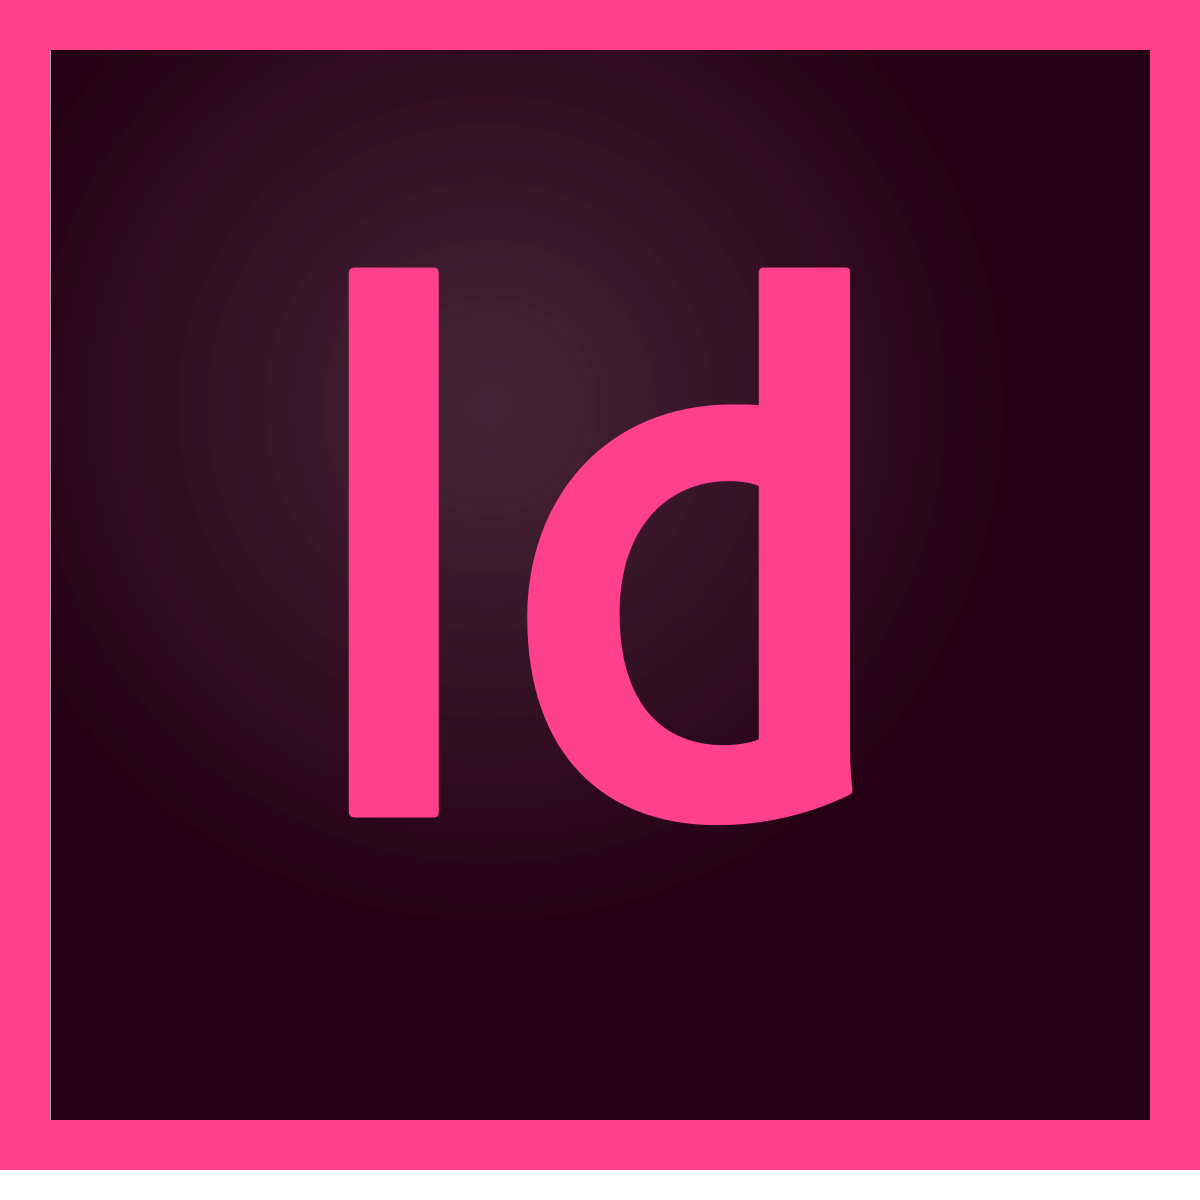 Adobe InDesign Logo - Adobe InDesign